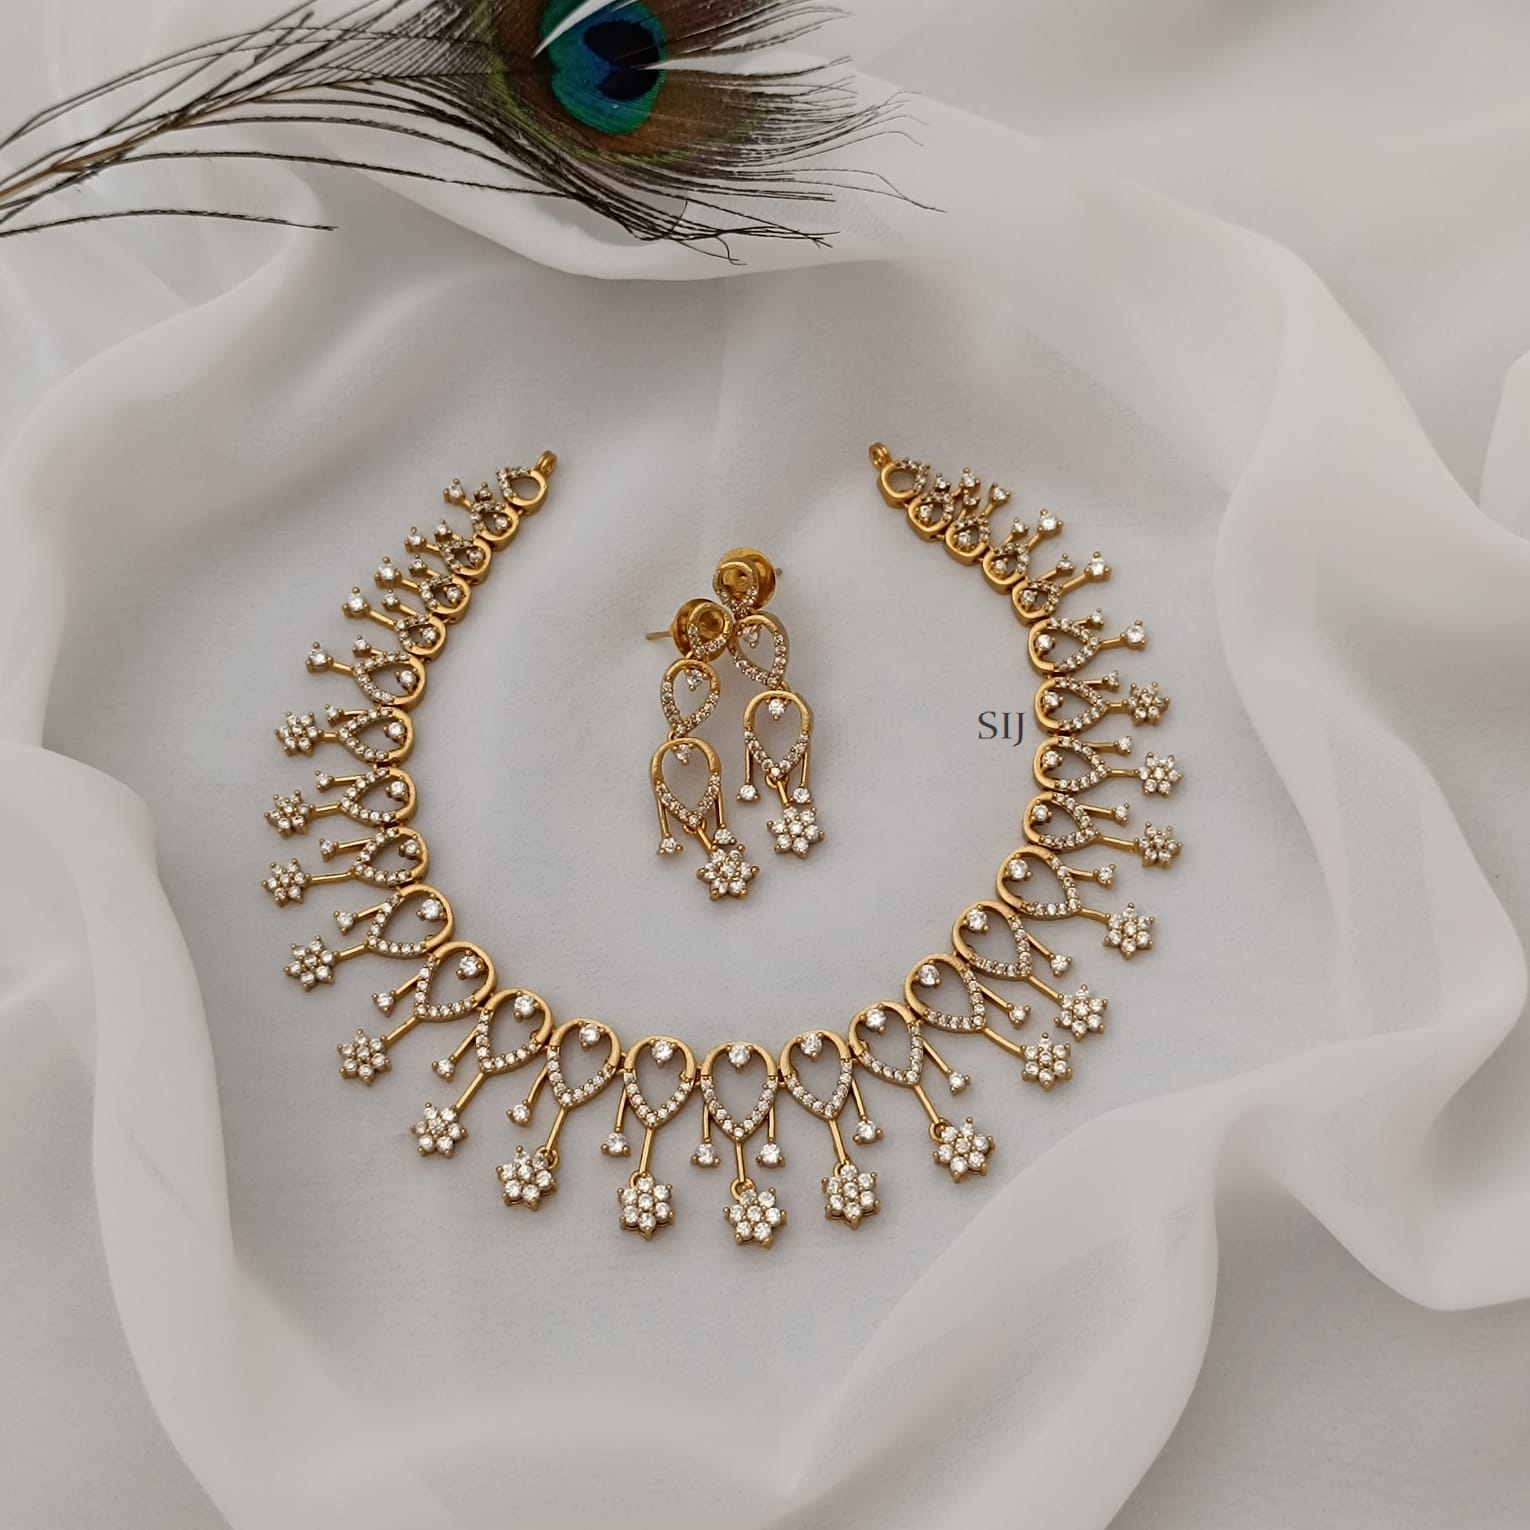 Shimmering Malllu Style Necklace